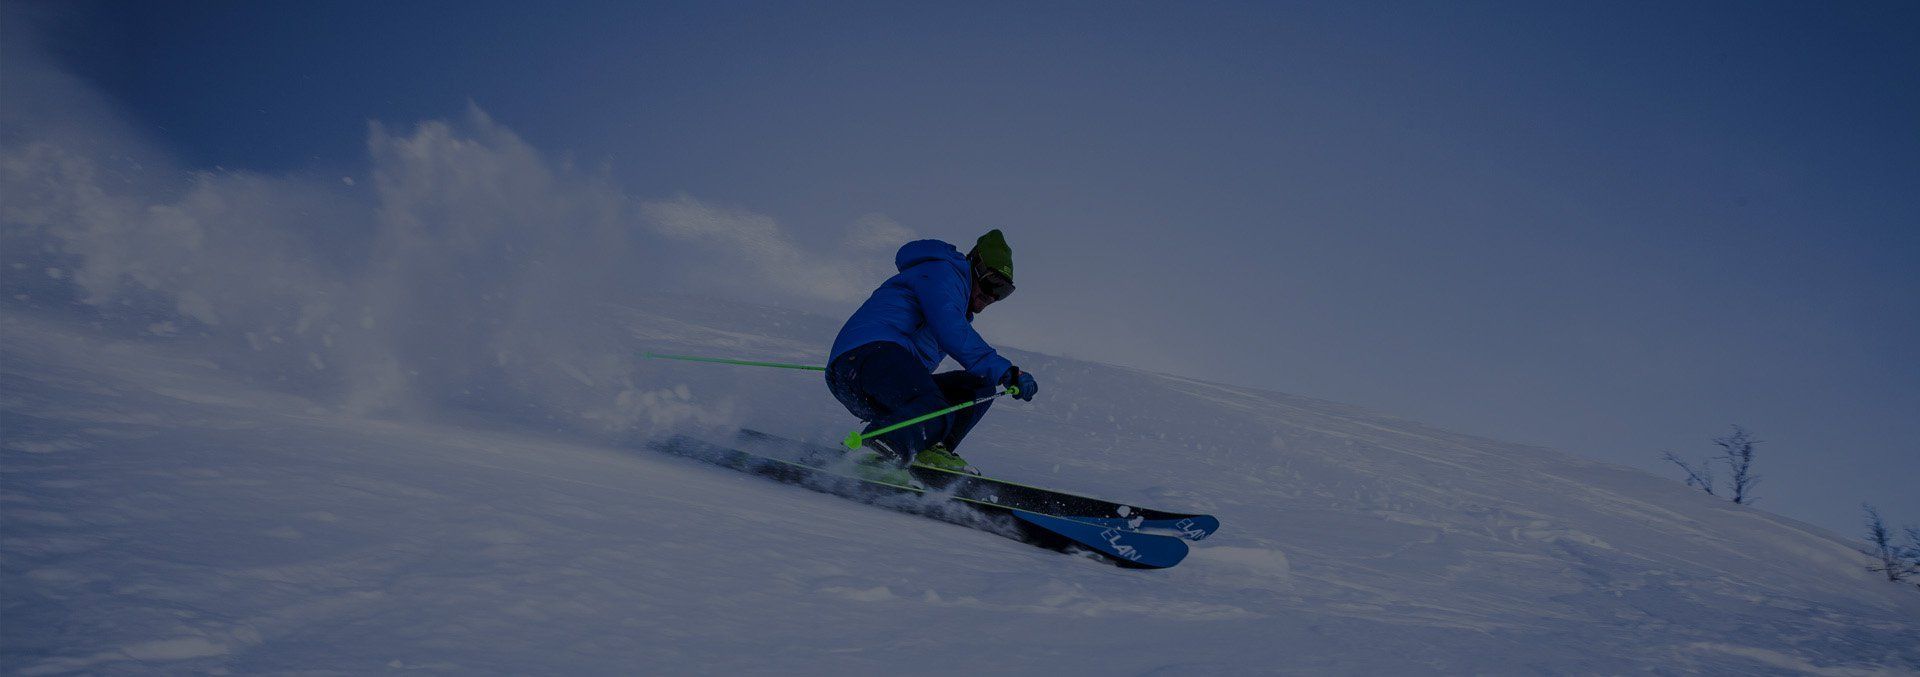 Sciatore che fa una curva in neve fresca